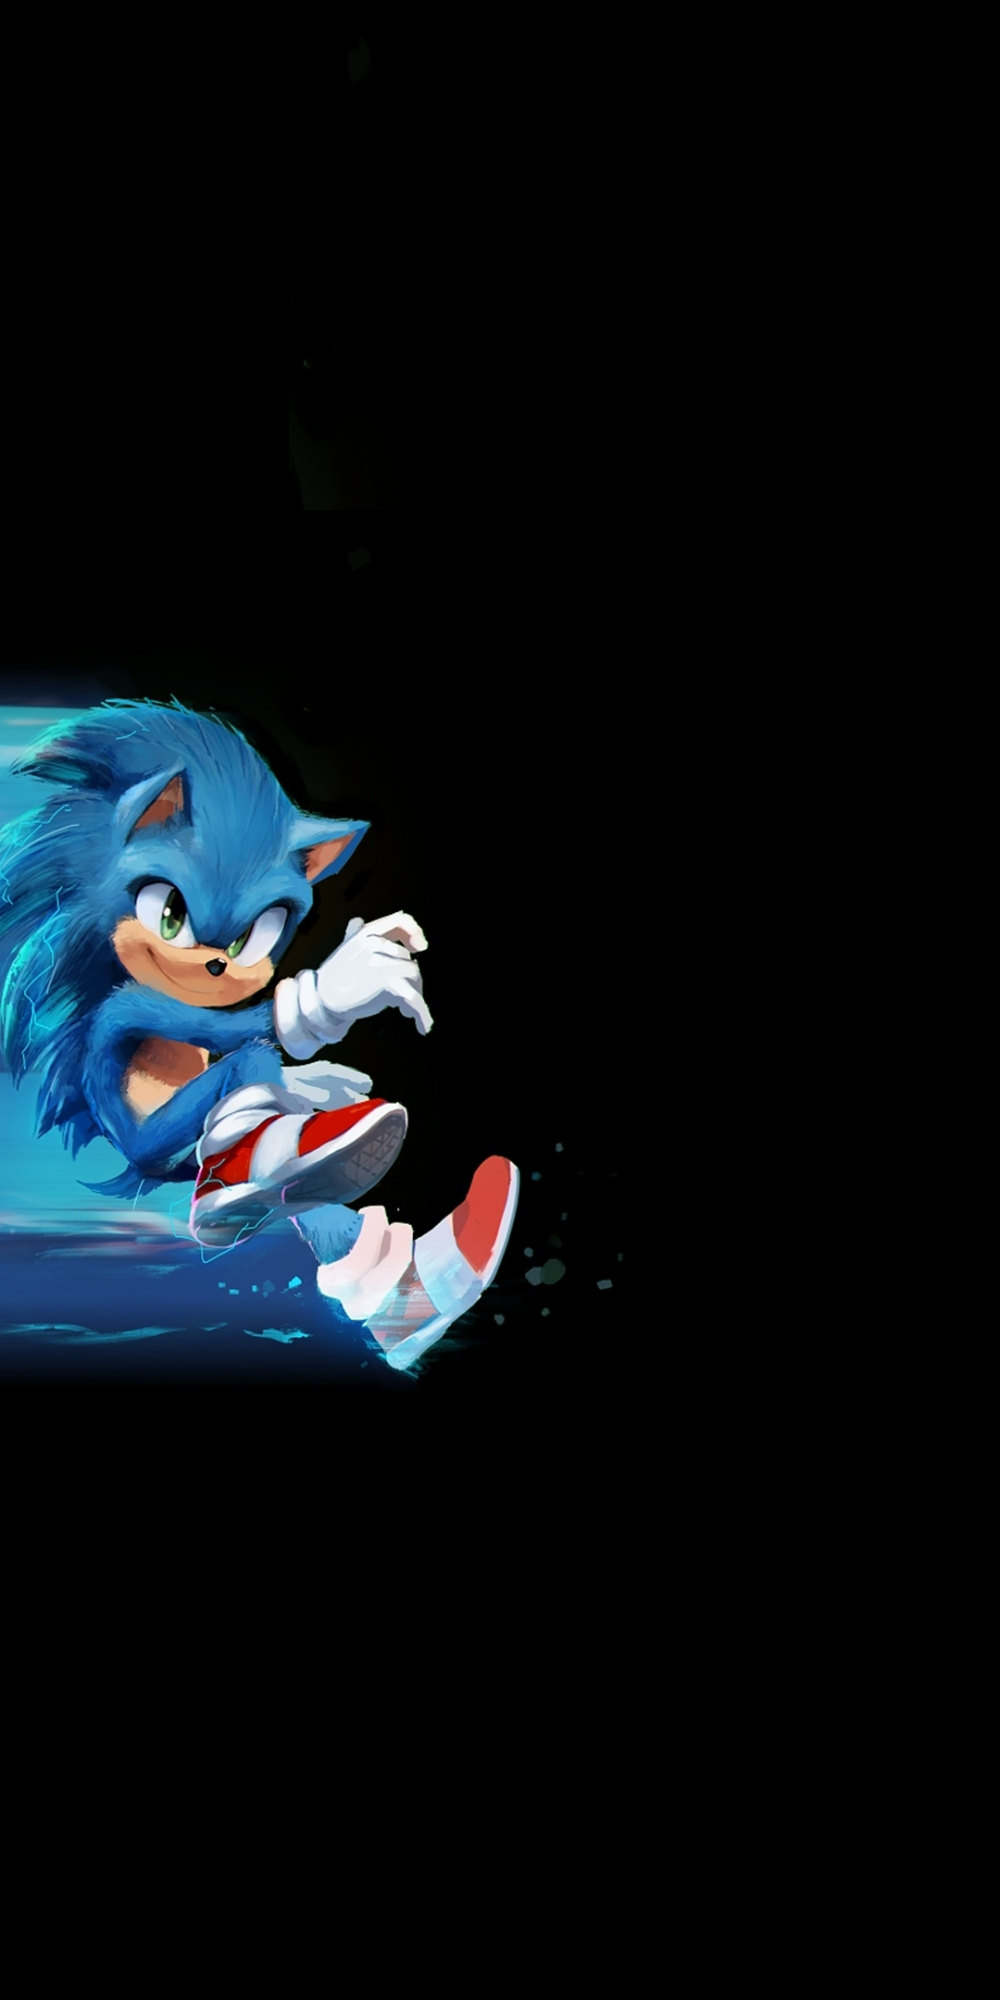 Every Sonic the Hedgehog Cartoon Ranked